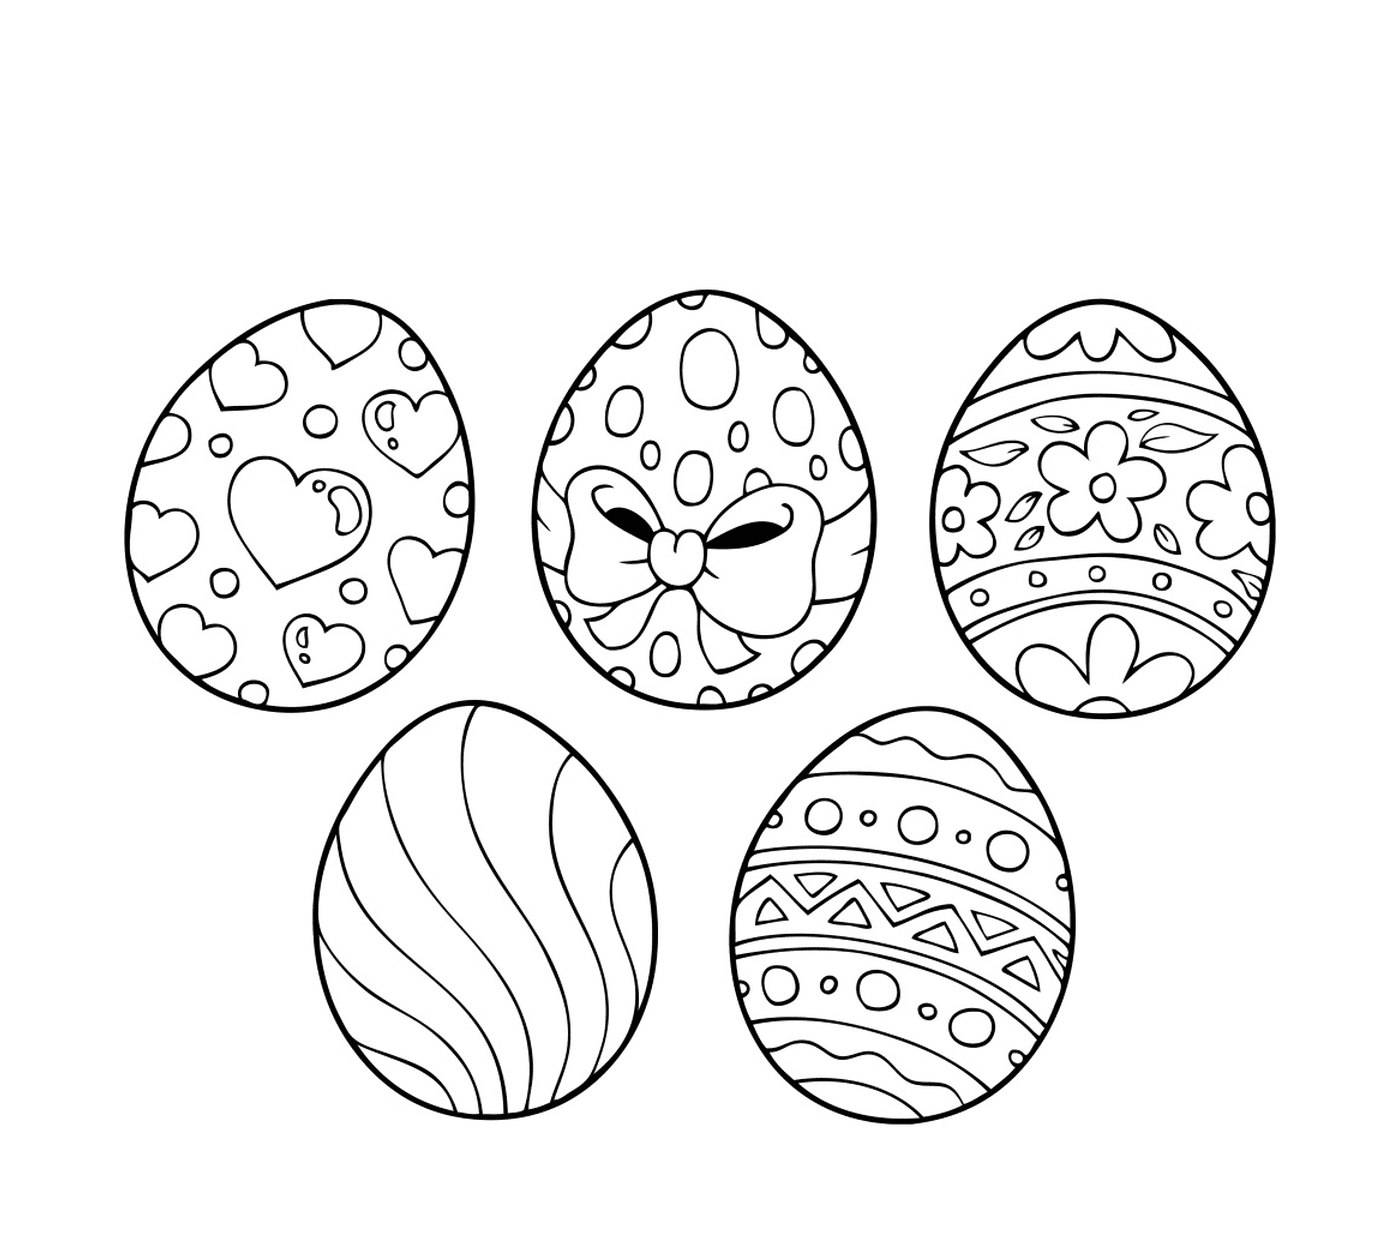  Cinco ovos de Páscoa decorados 